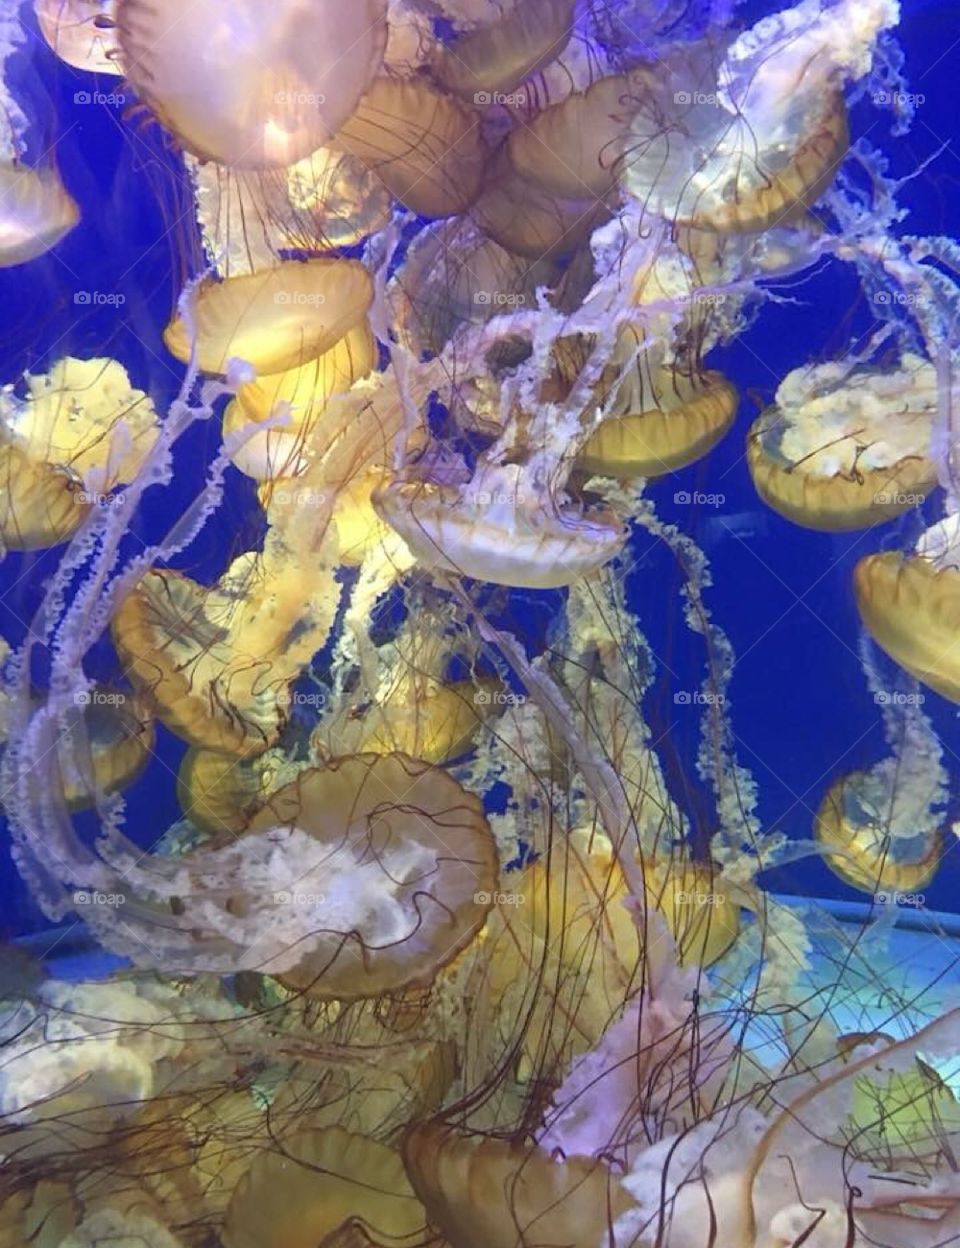 Chrysaora Jellyfish cluster in the Aquarium of the Pacific in California.